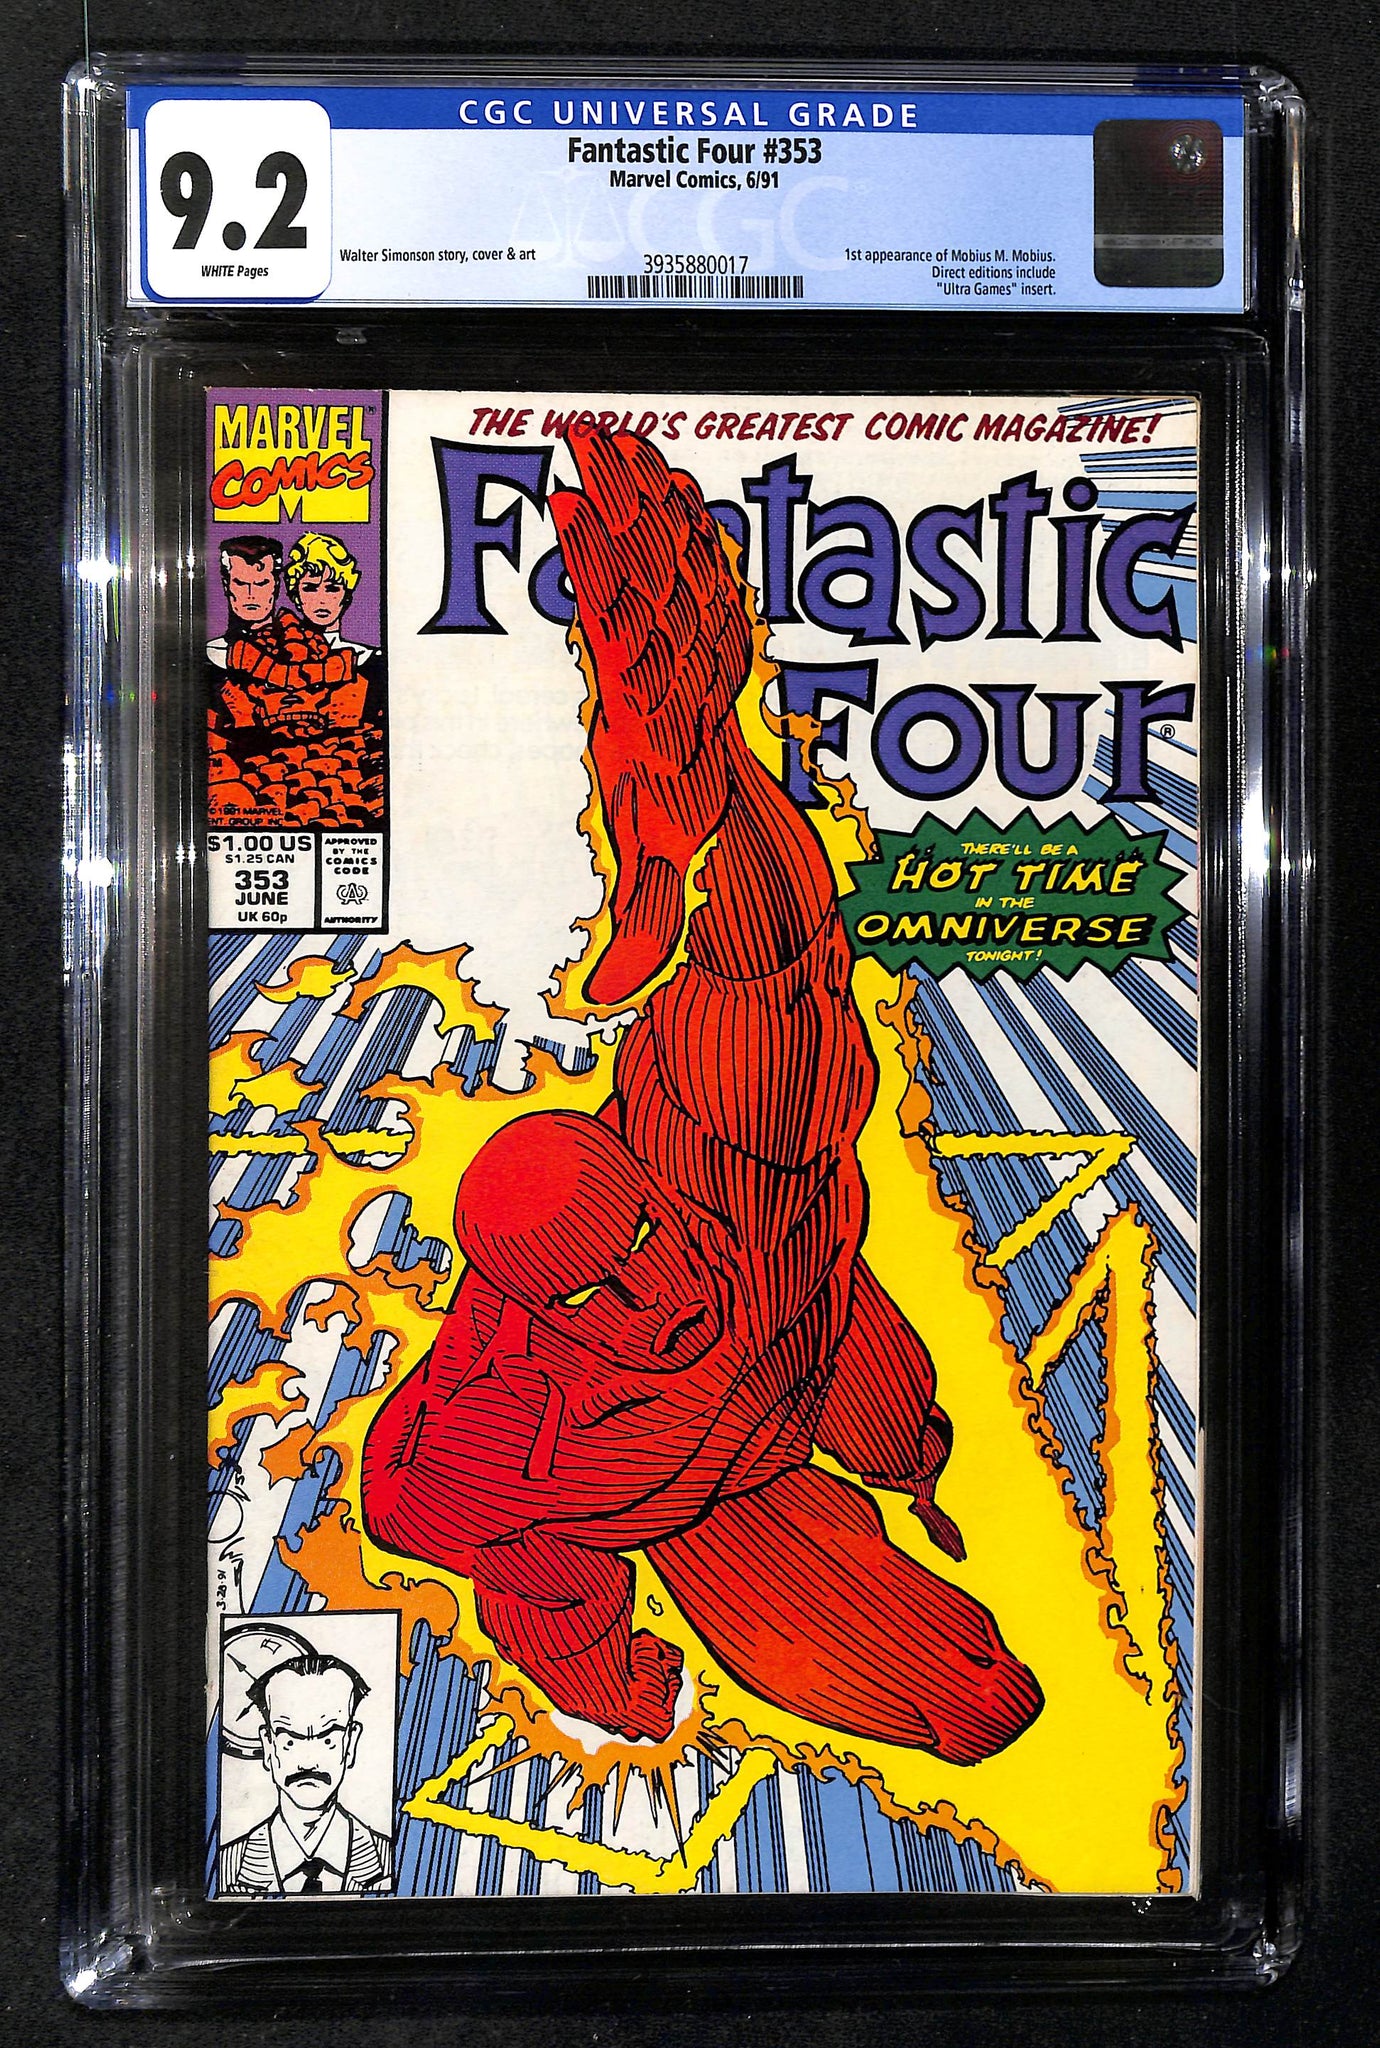 Fantastic Four #353 CGC 9.2 1st appearance of Mobius M. Mobius